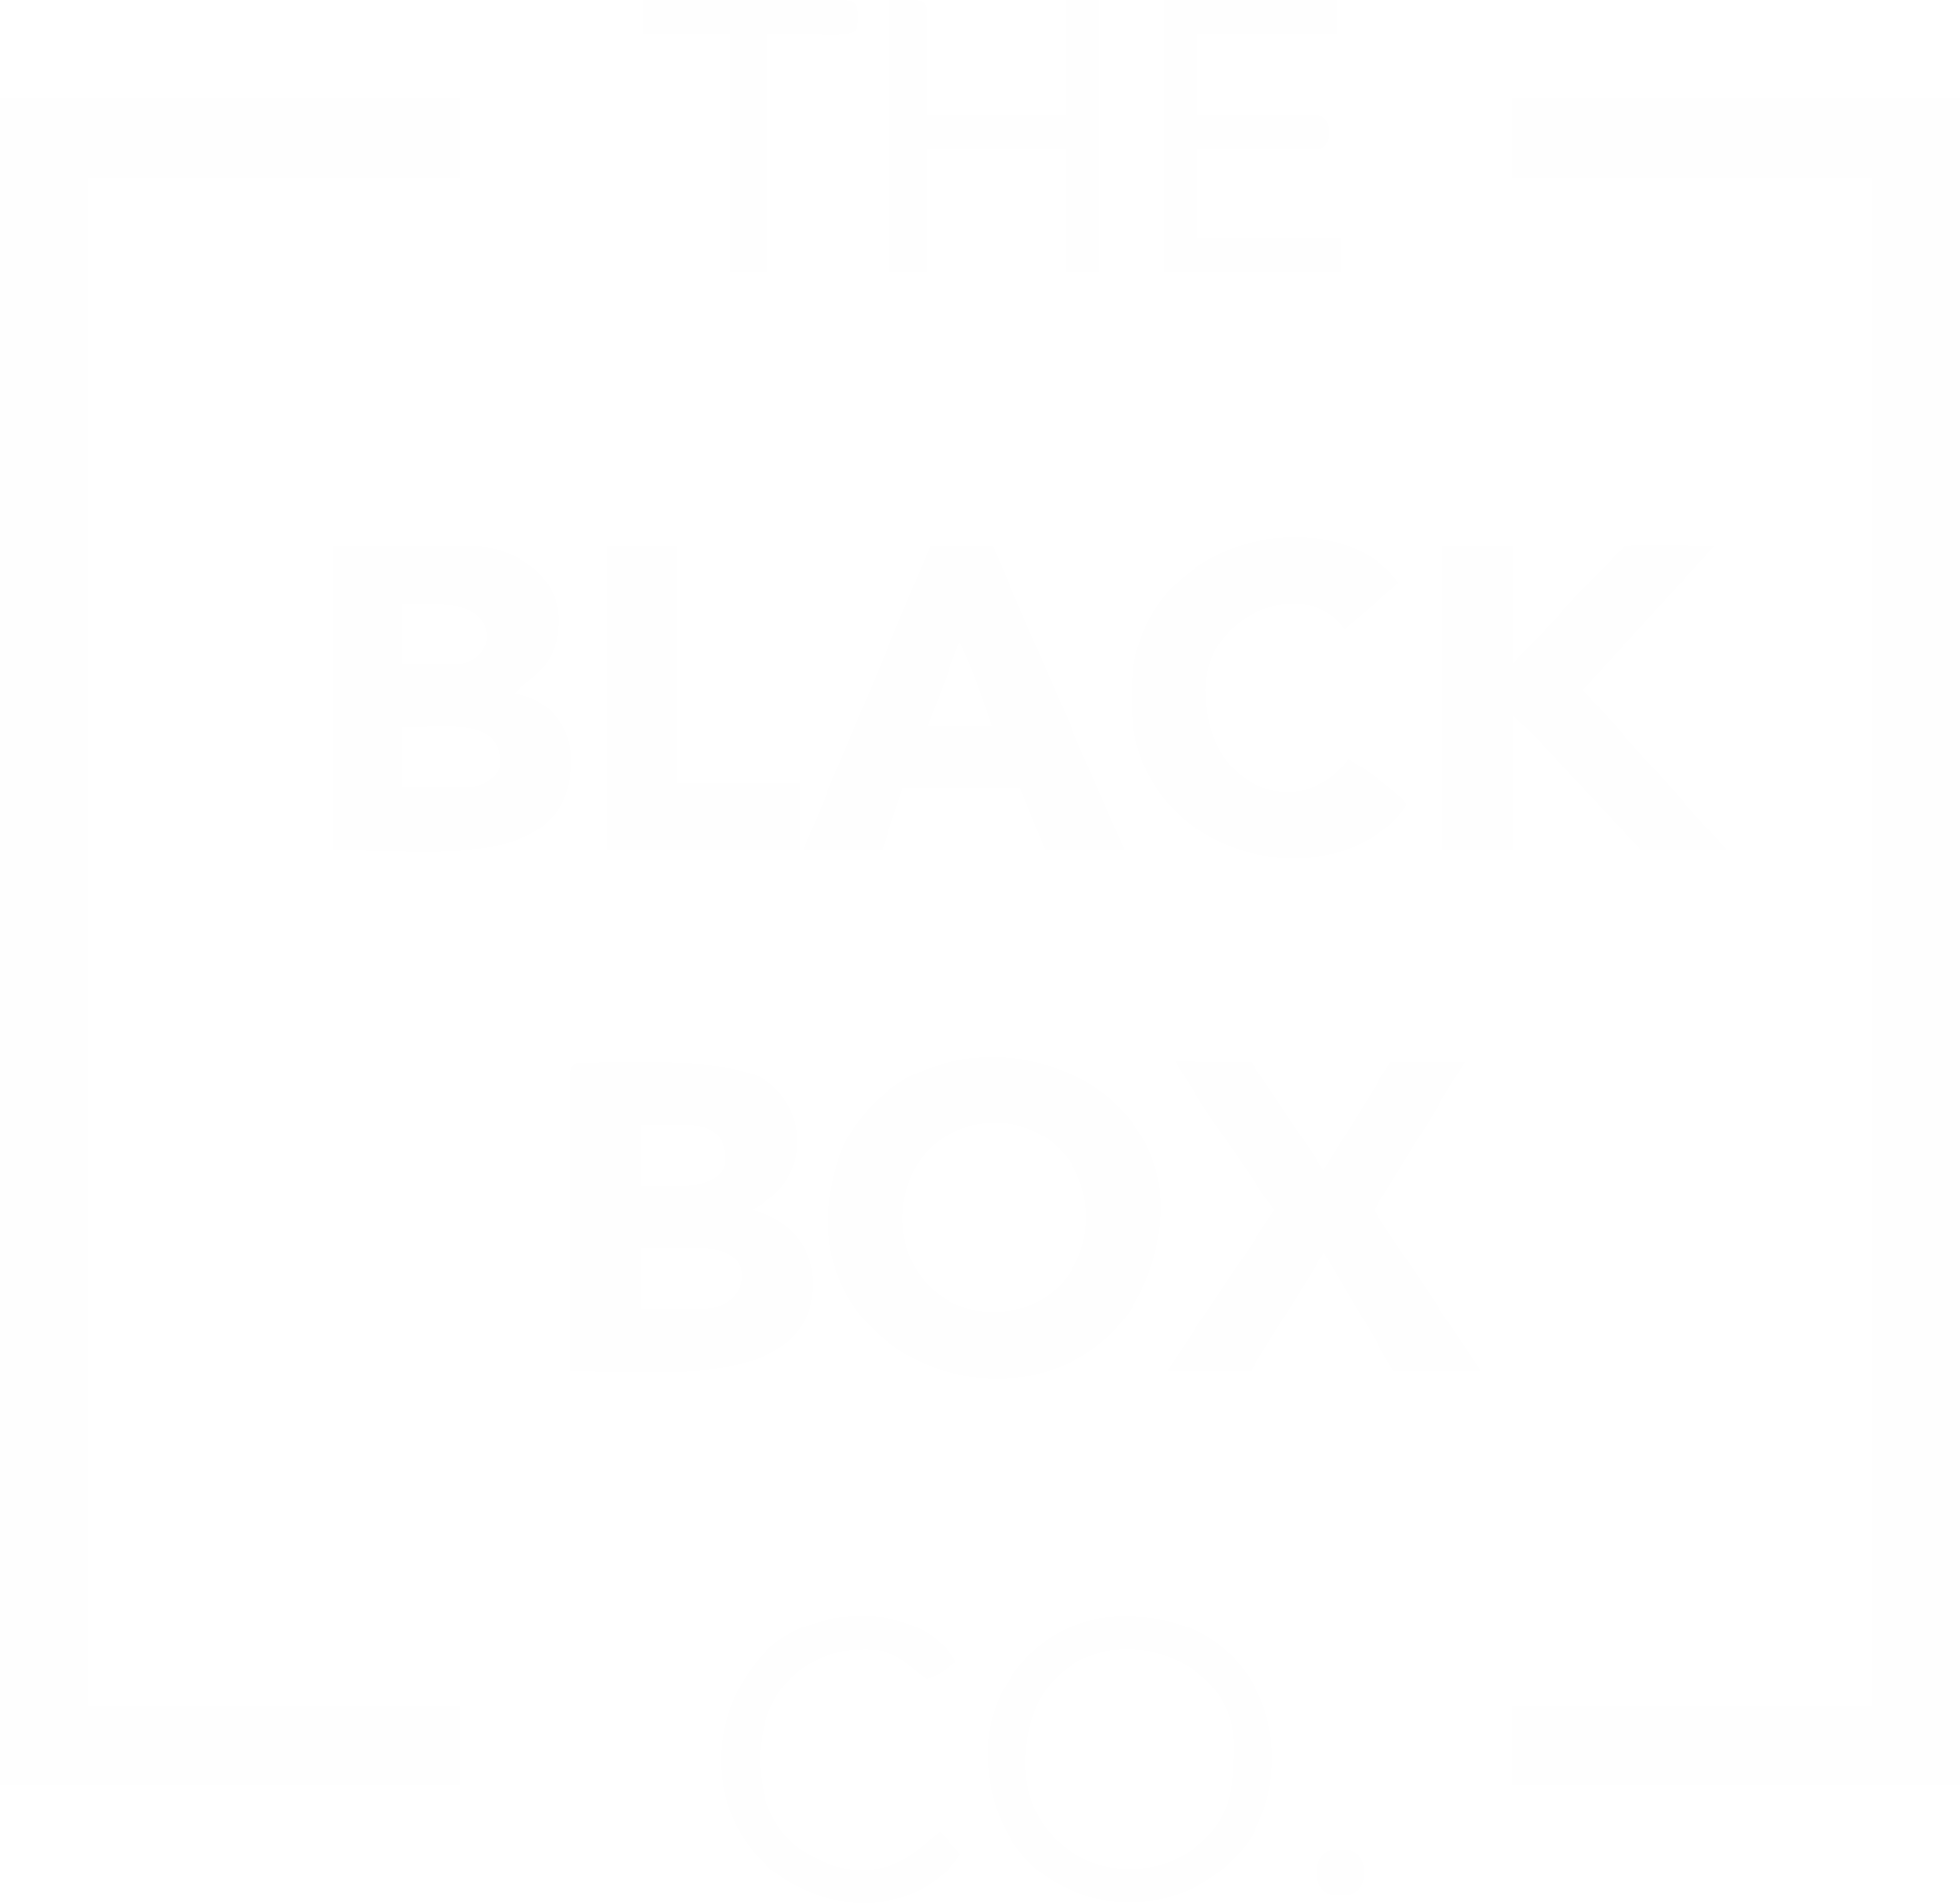 The Black Box Co.